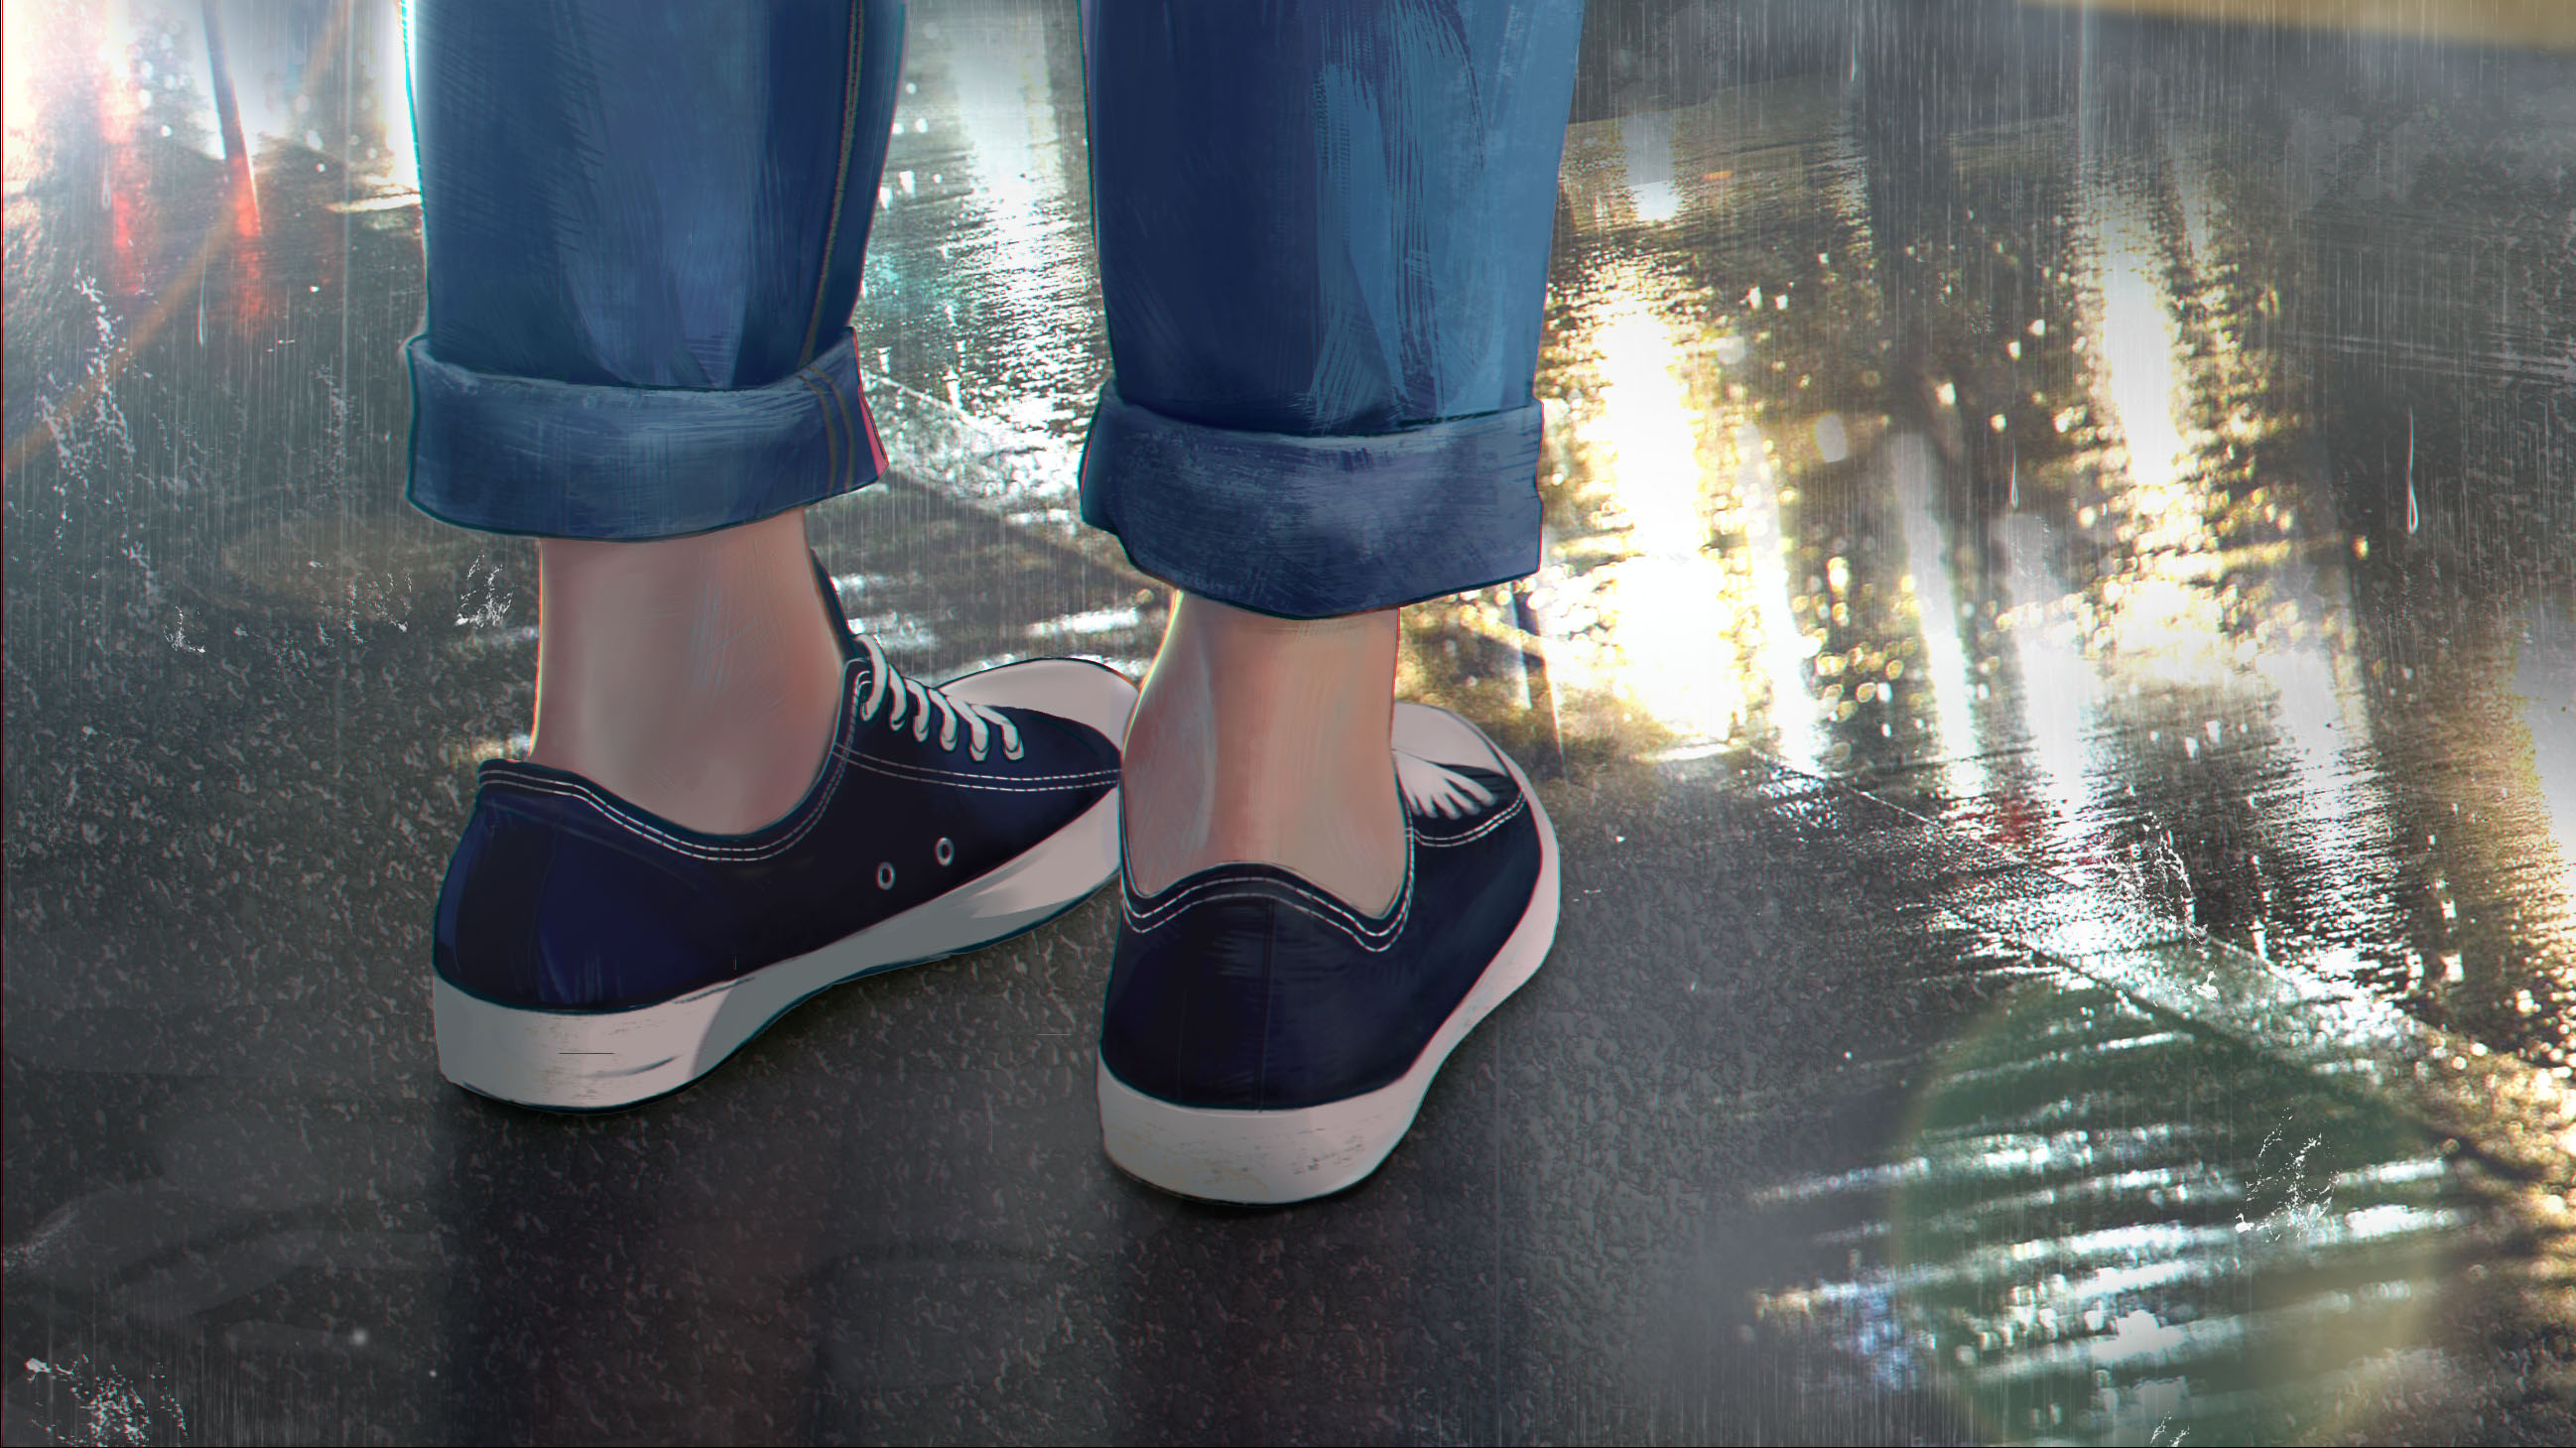 Anime Rain Water Drops Water Sneakers Jeans Legs Road City Lights Wet Street Urban Pixiv 2596x1459